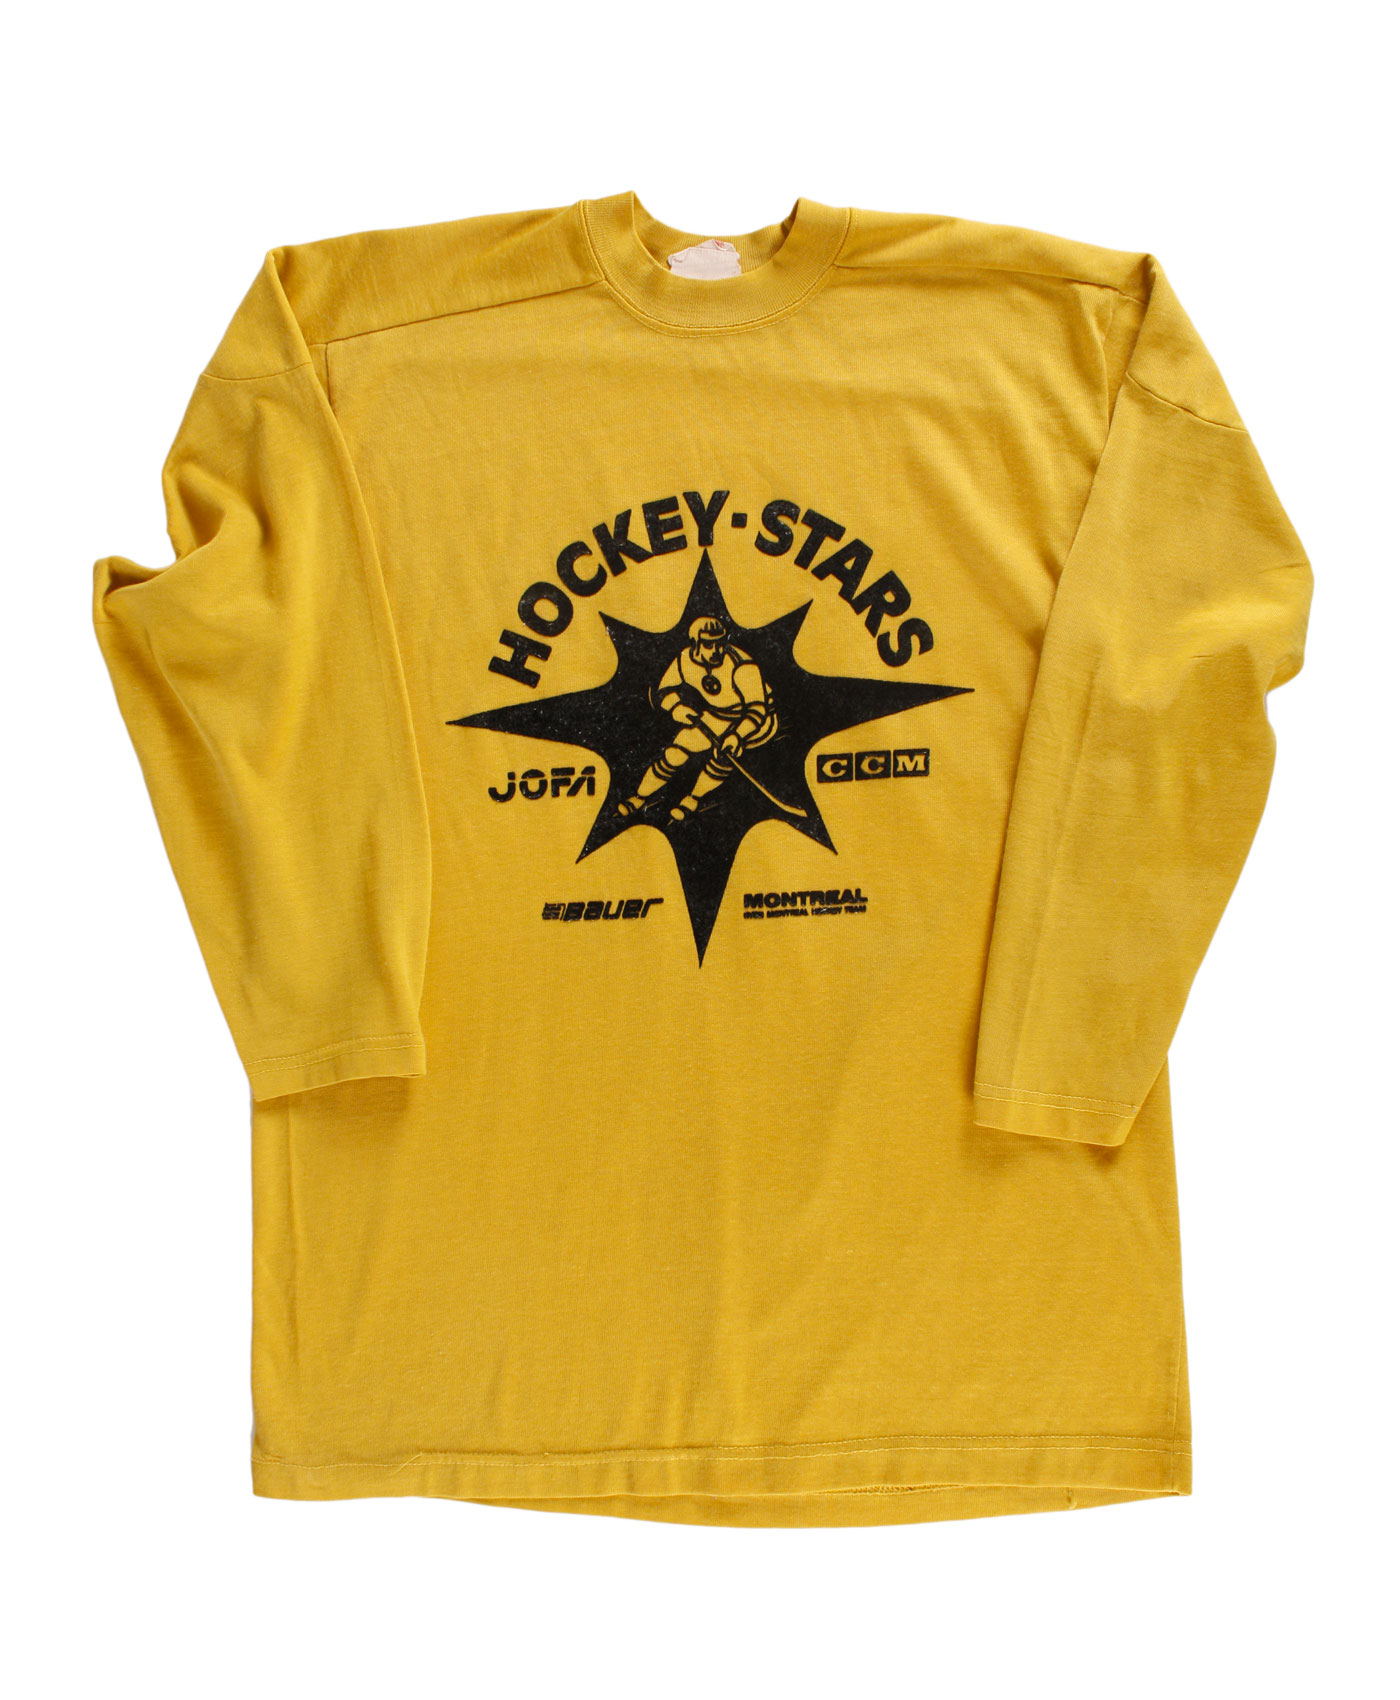 SANDOW SPORTING Hokey t-shirt '60s